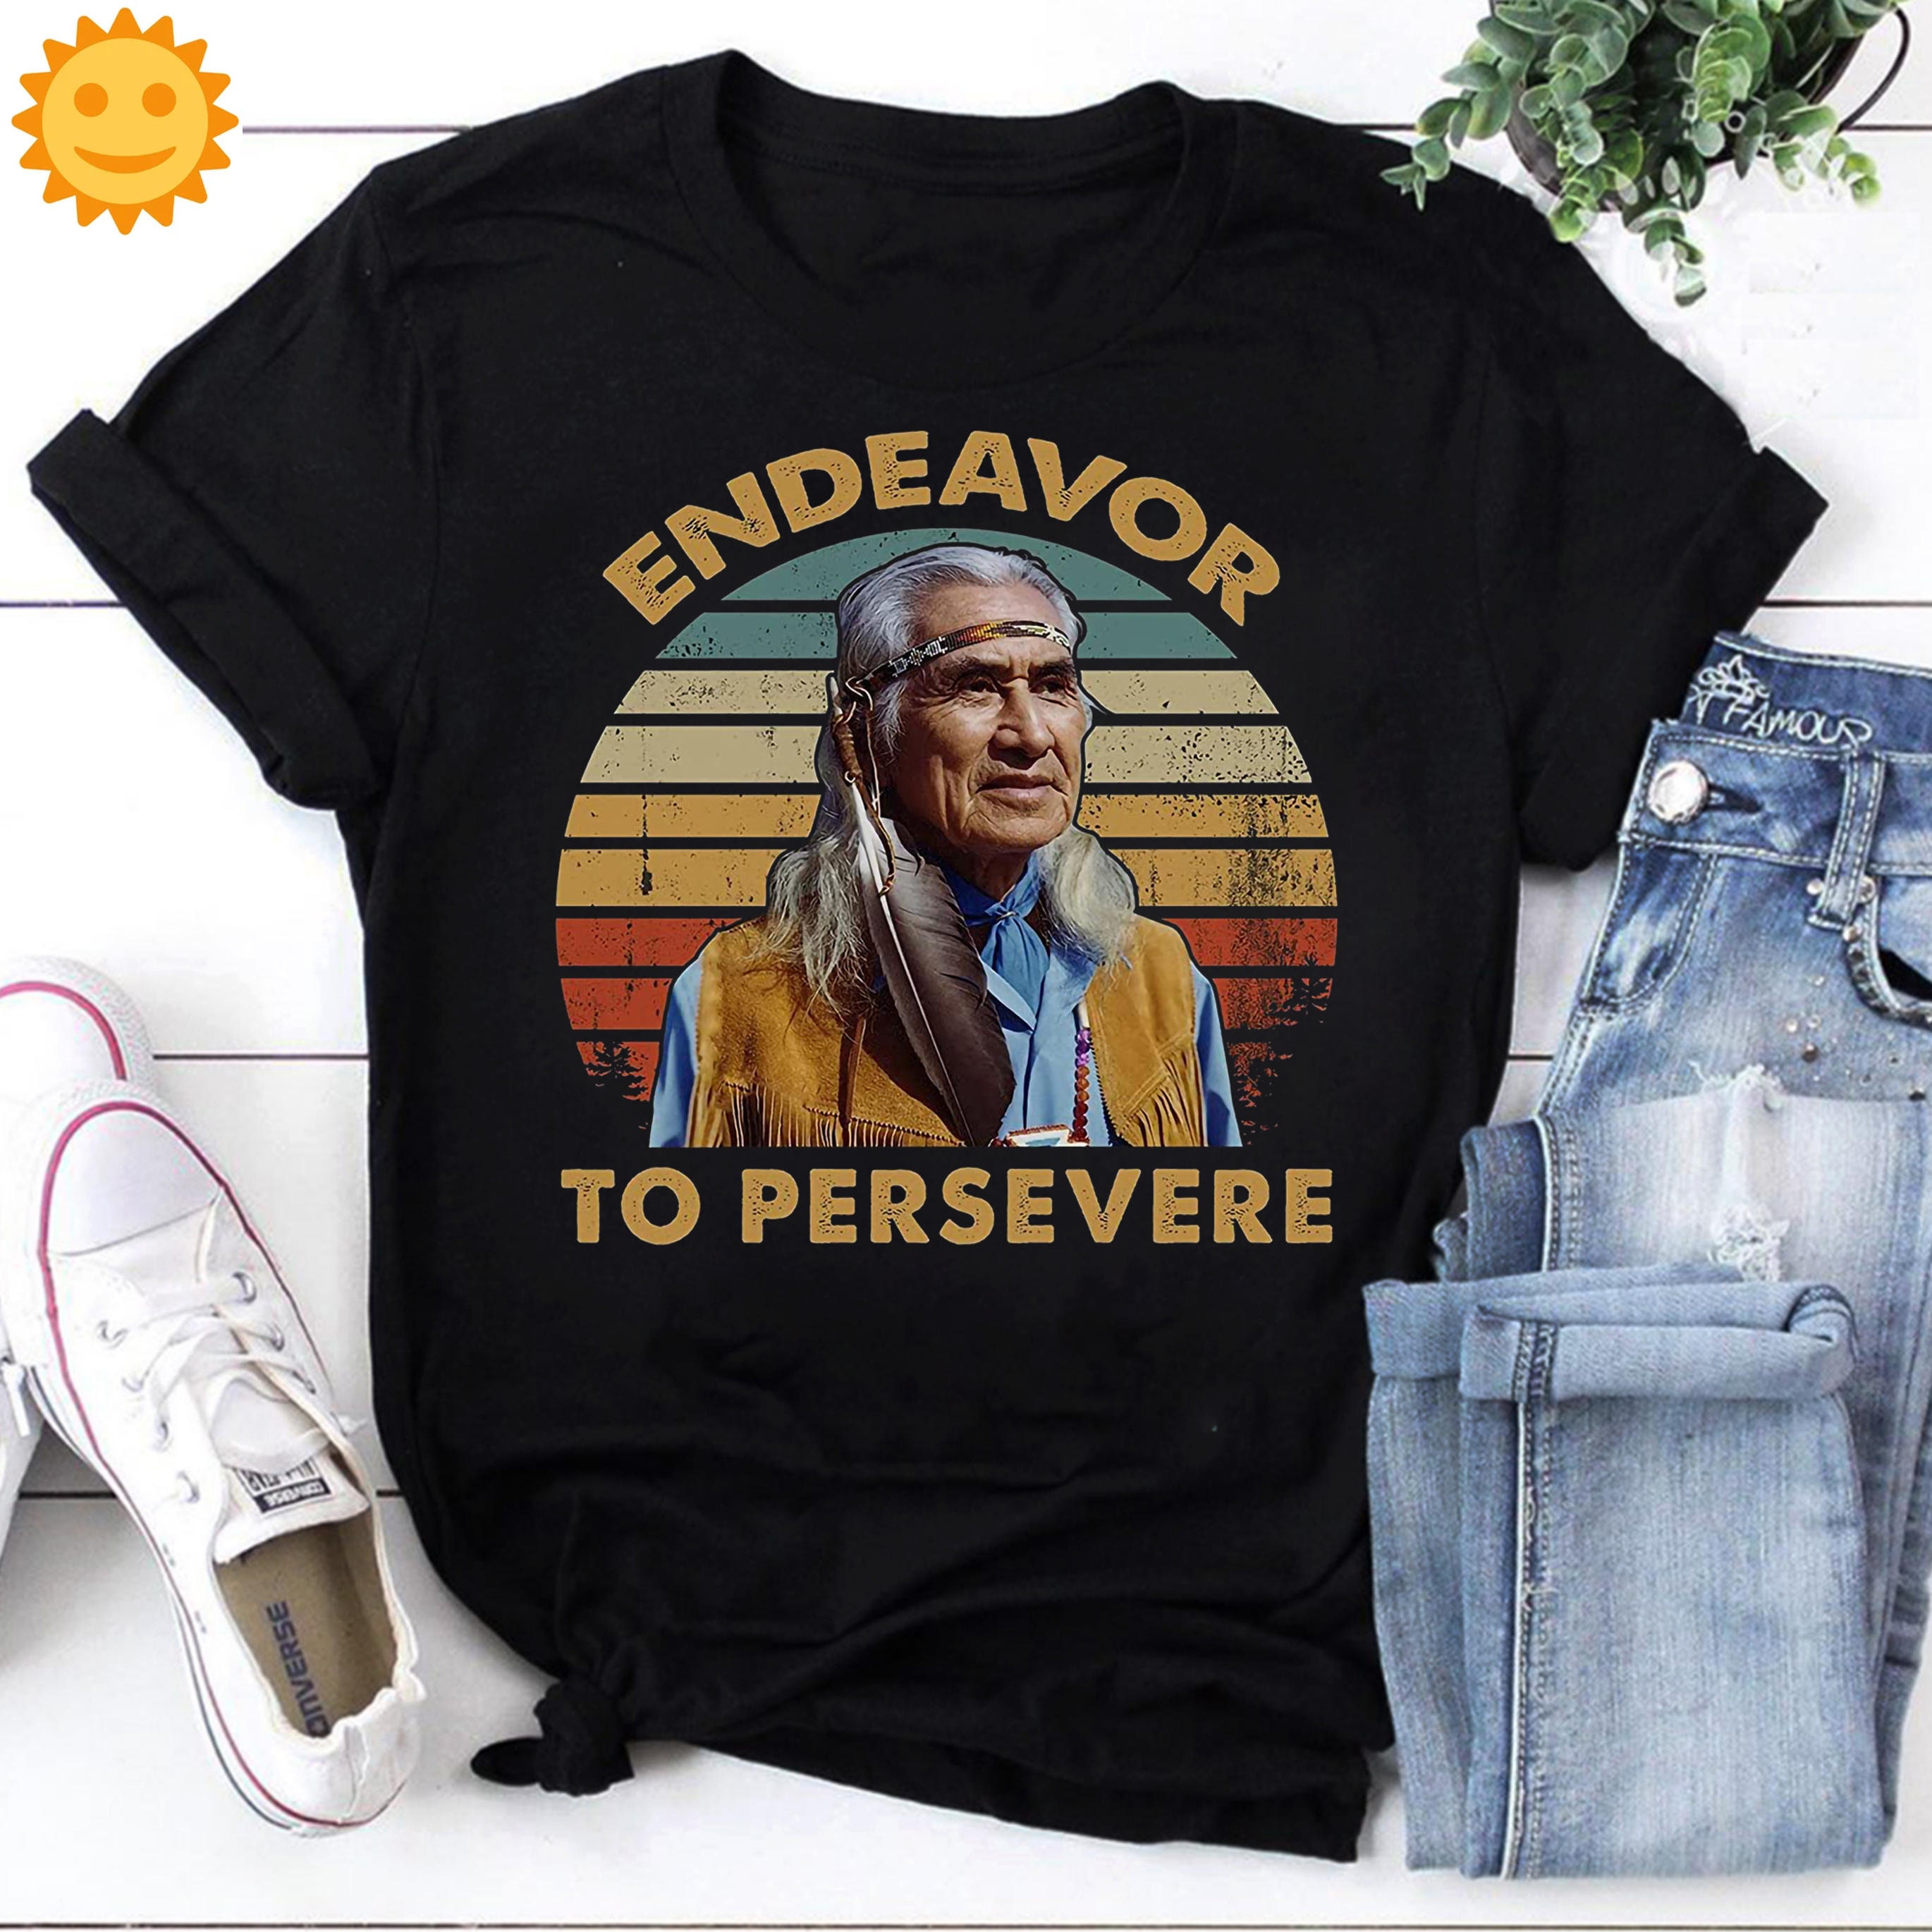 Endeavor to Persevere Vintage T-shirt, the Outlaw Shirt, Josey Wales Shirt,  Cowboy Movie Shirt, Cowboy Shirt, Lone Watie Shirt -  Canada